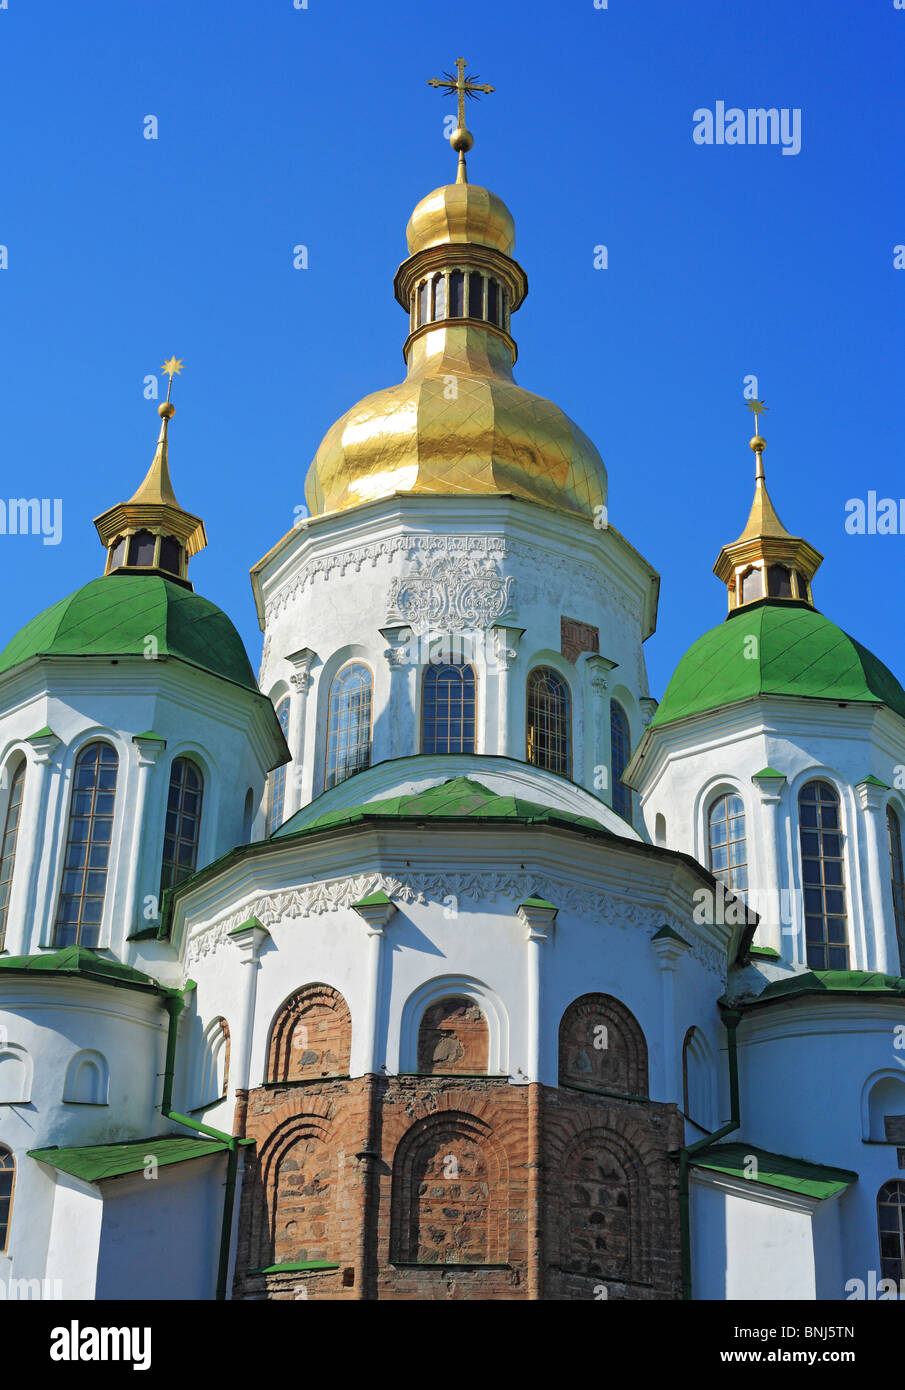 Eastern Europe Europa Europäische Reisen Ukraine ukrainische tagsüber blauen Himmel Kiew Kiew Architektur Gebäude Gebäude Kirche Stockfoto